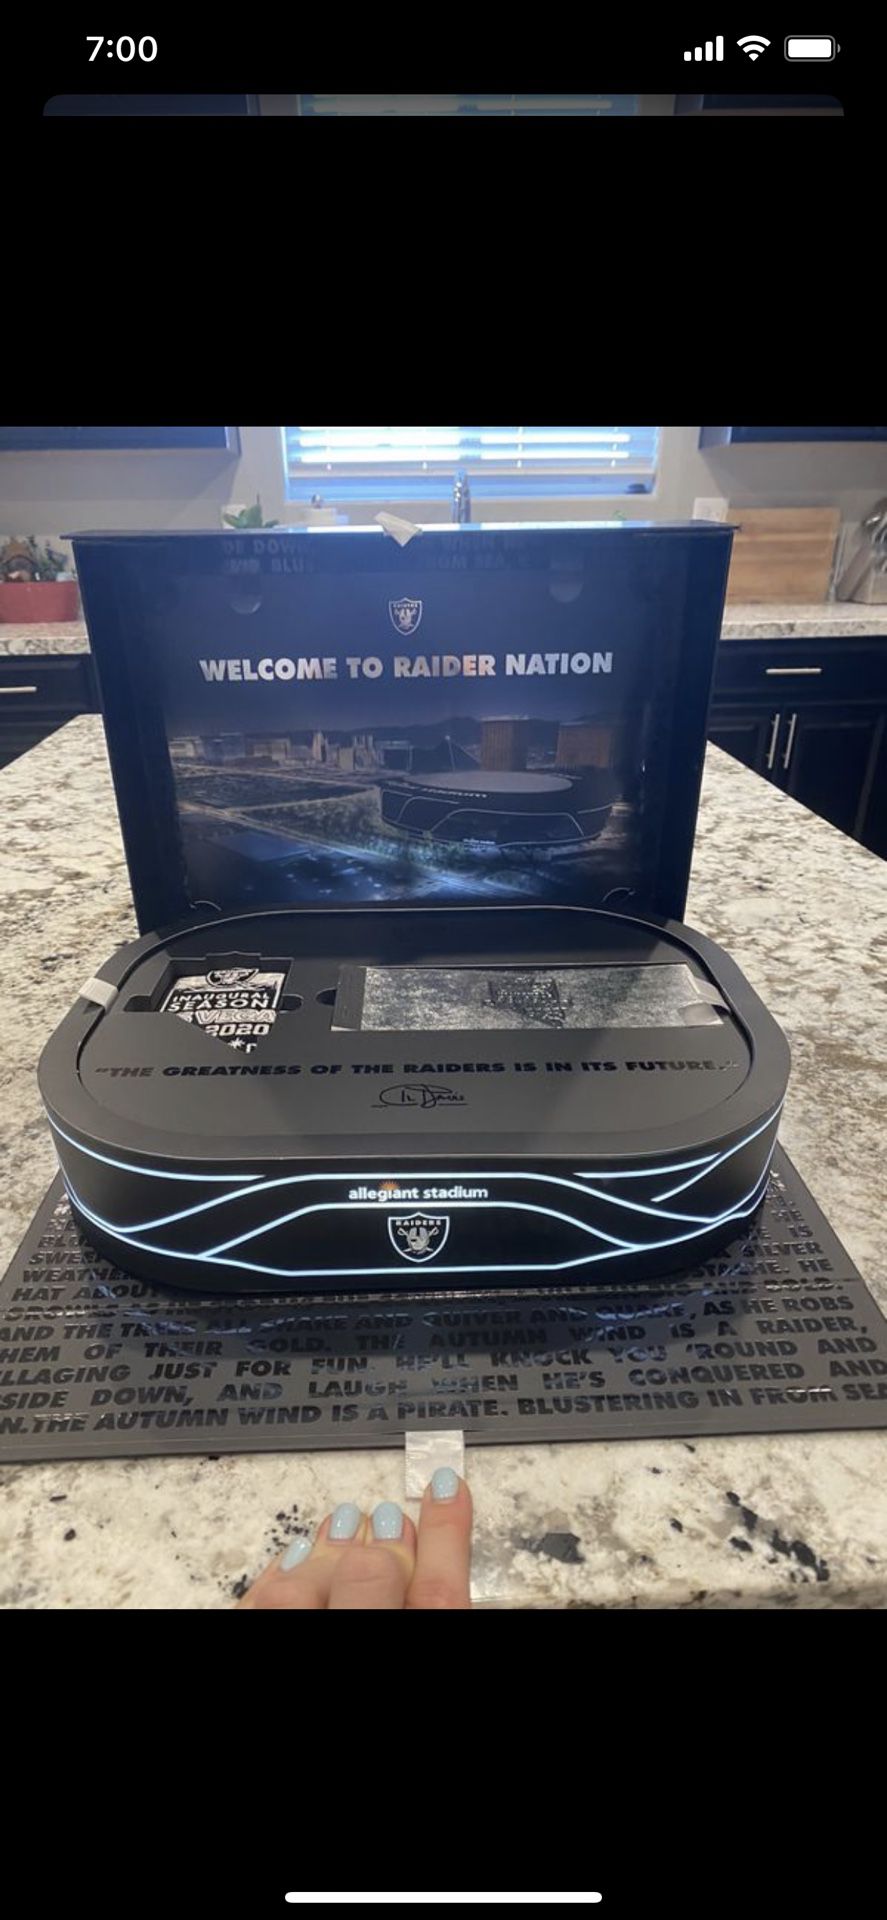 Las Vegas Raiders 2020 Inaugural Season Ticket holder gift box